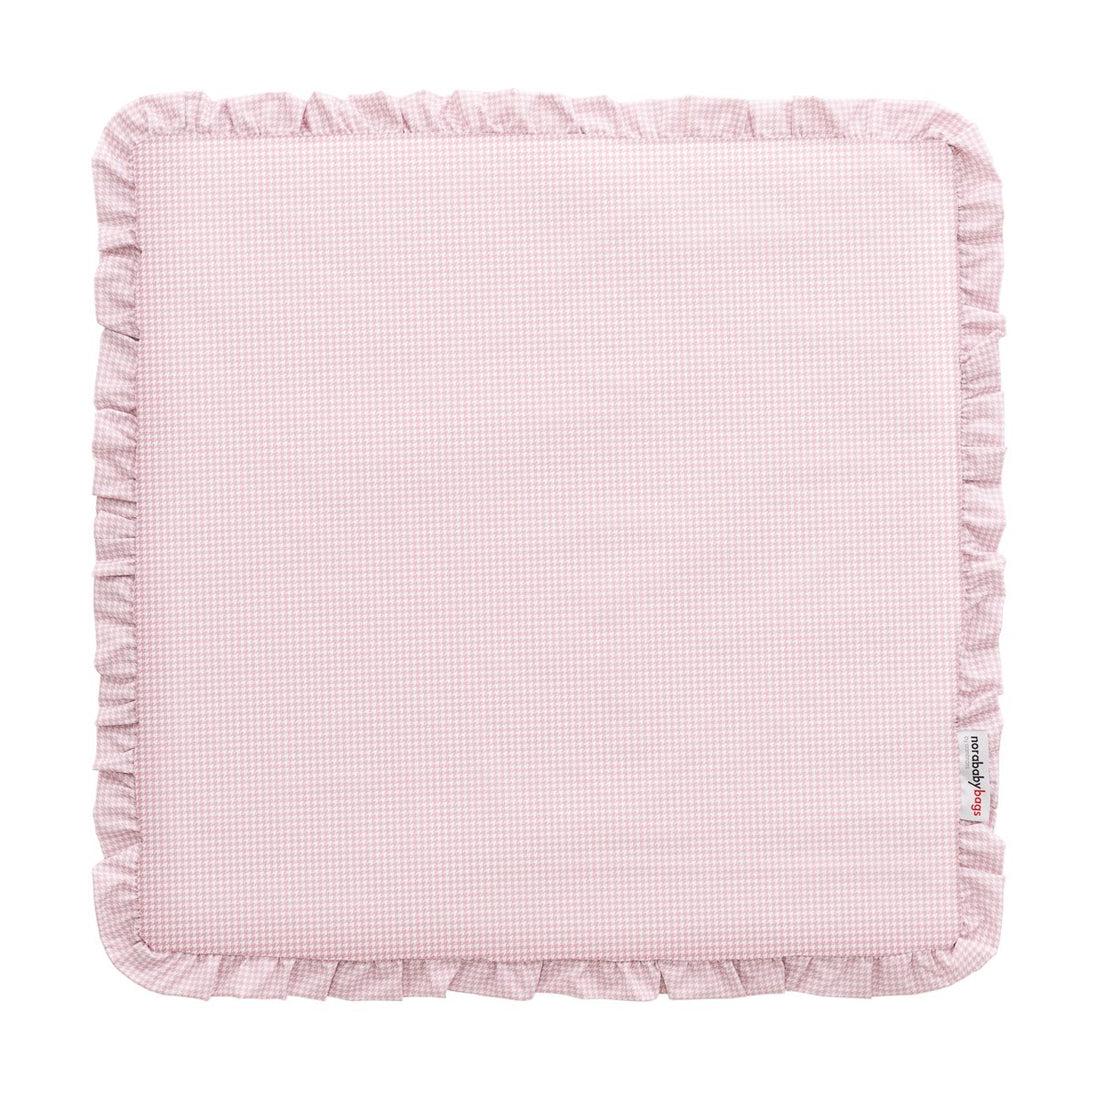 cambrass-reversible-blanket-65x65x1cm-mini-windsord-pink-baby-nursery-rjc-50624